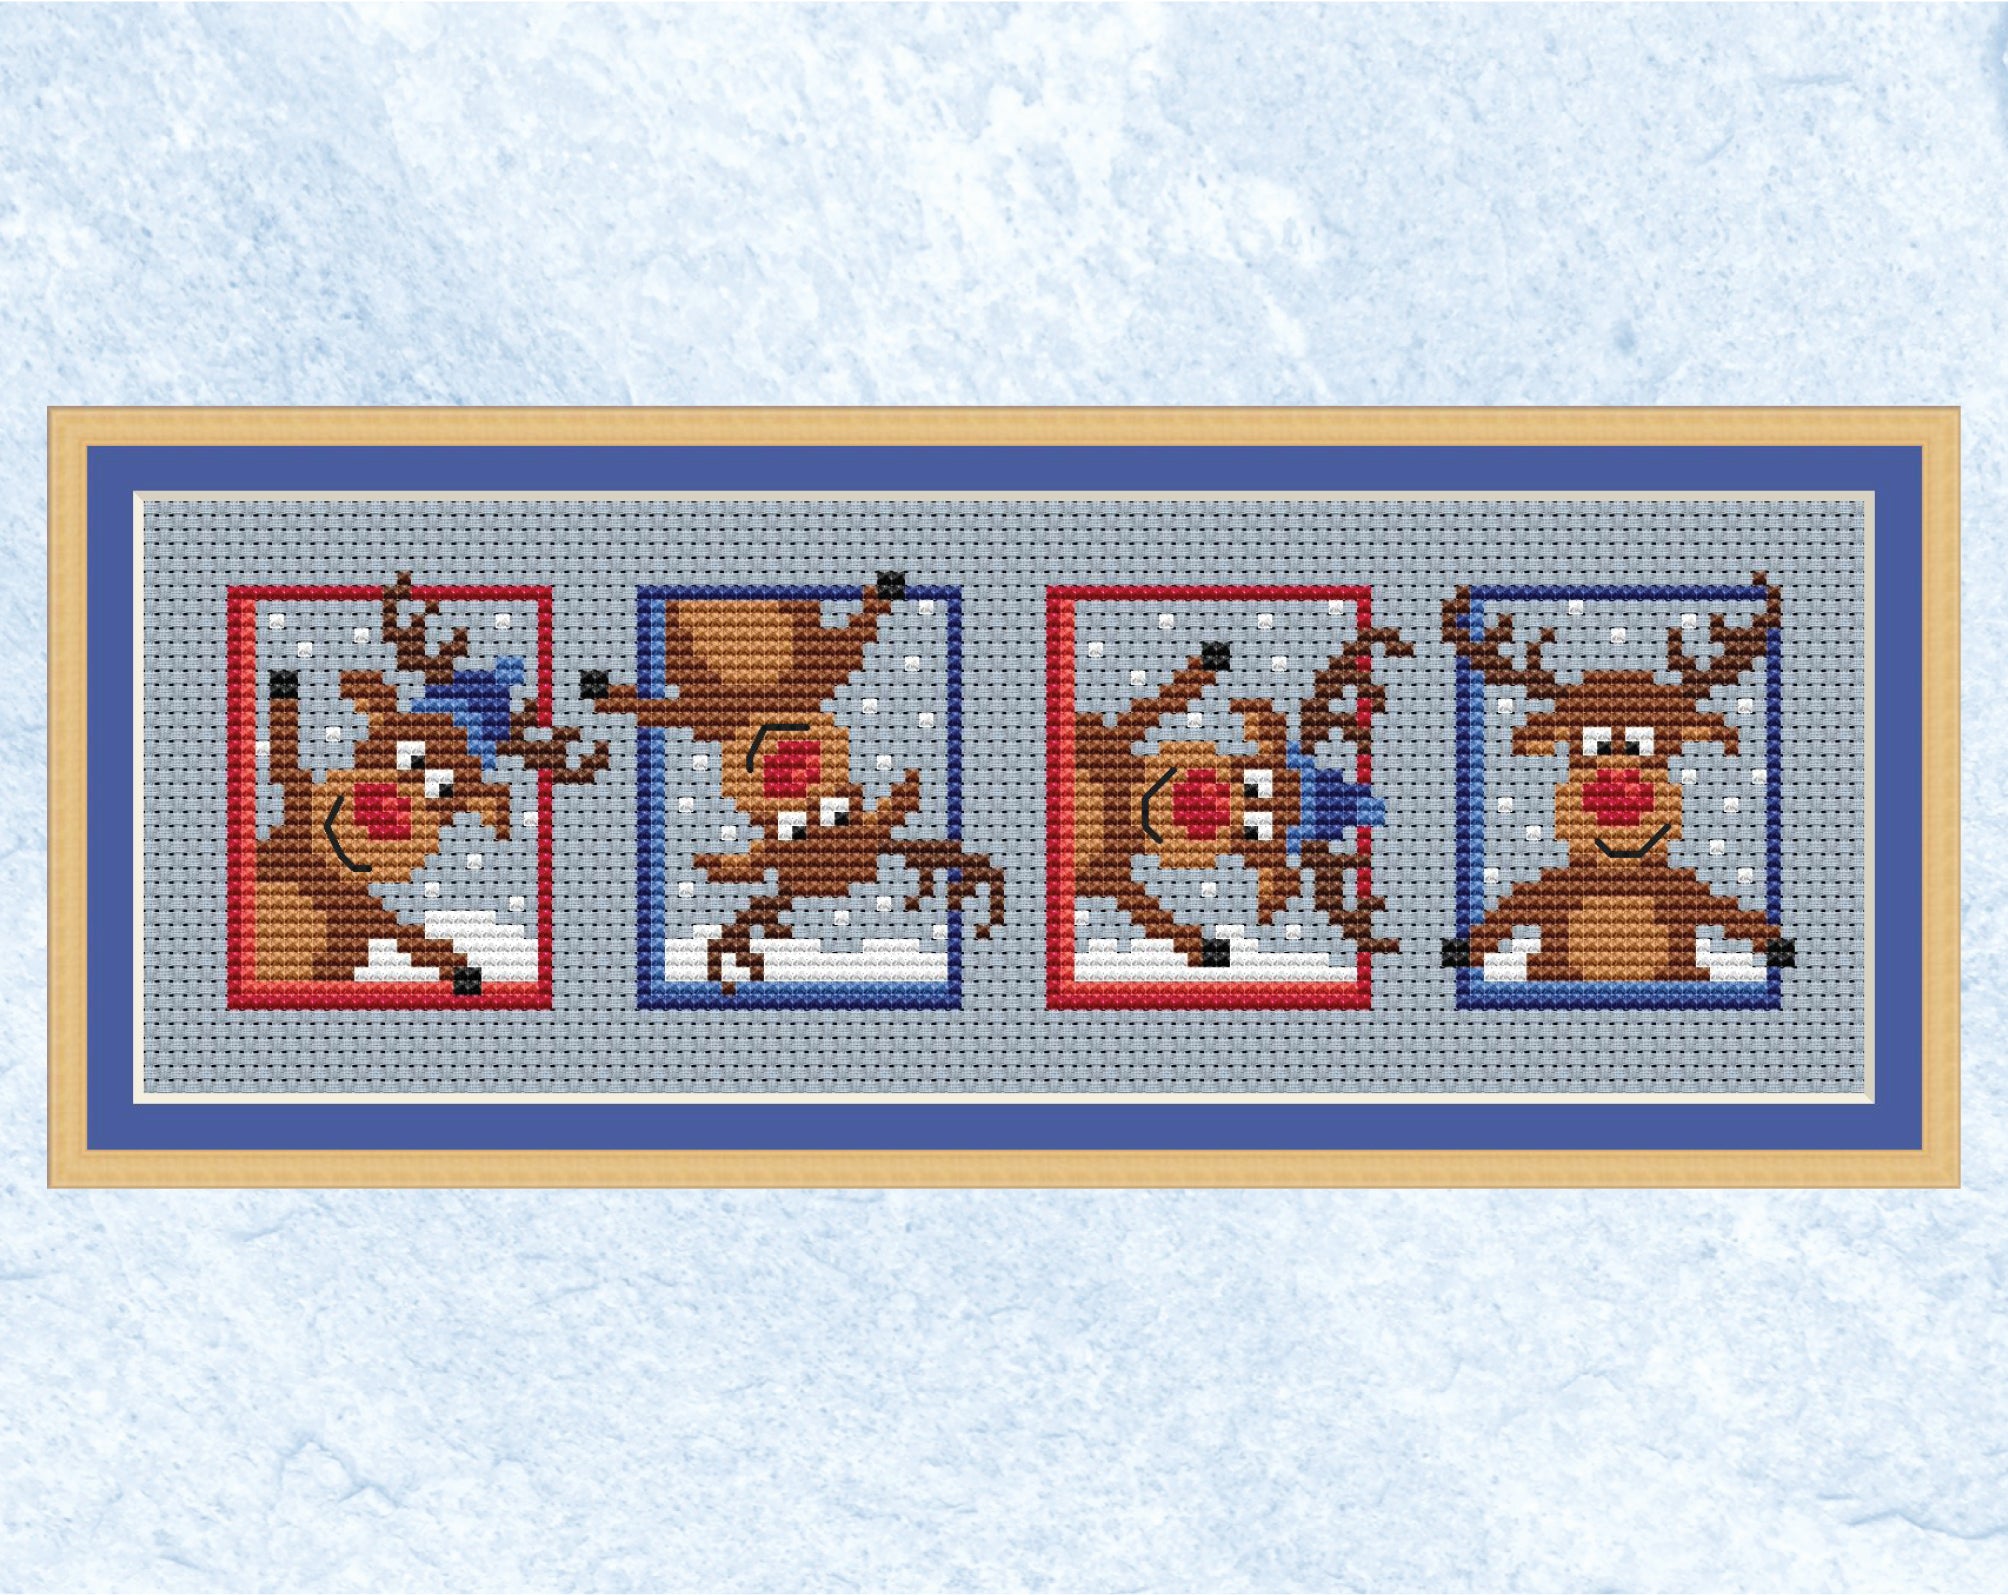 Set of Reindeer cross stitch pattern. Fun mini designs of Christmas cartoon reindeers. Shown with frame.